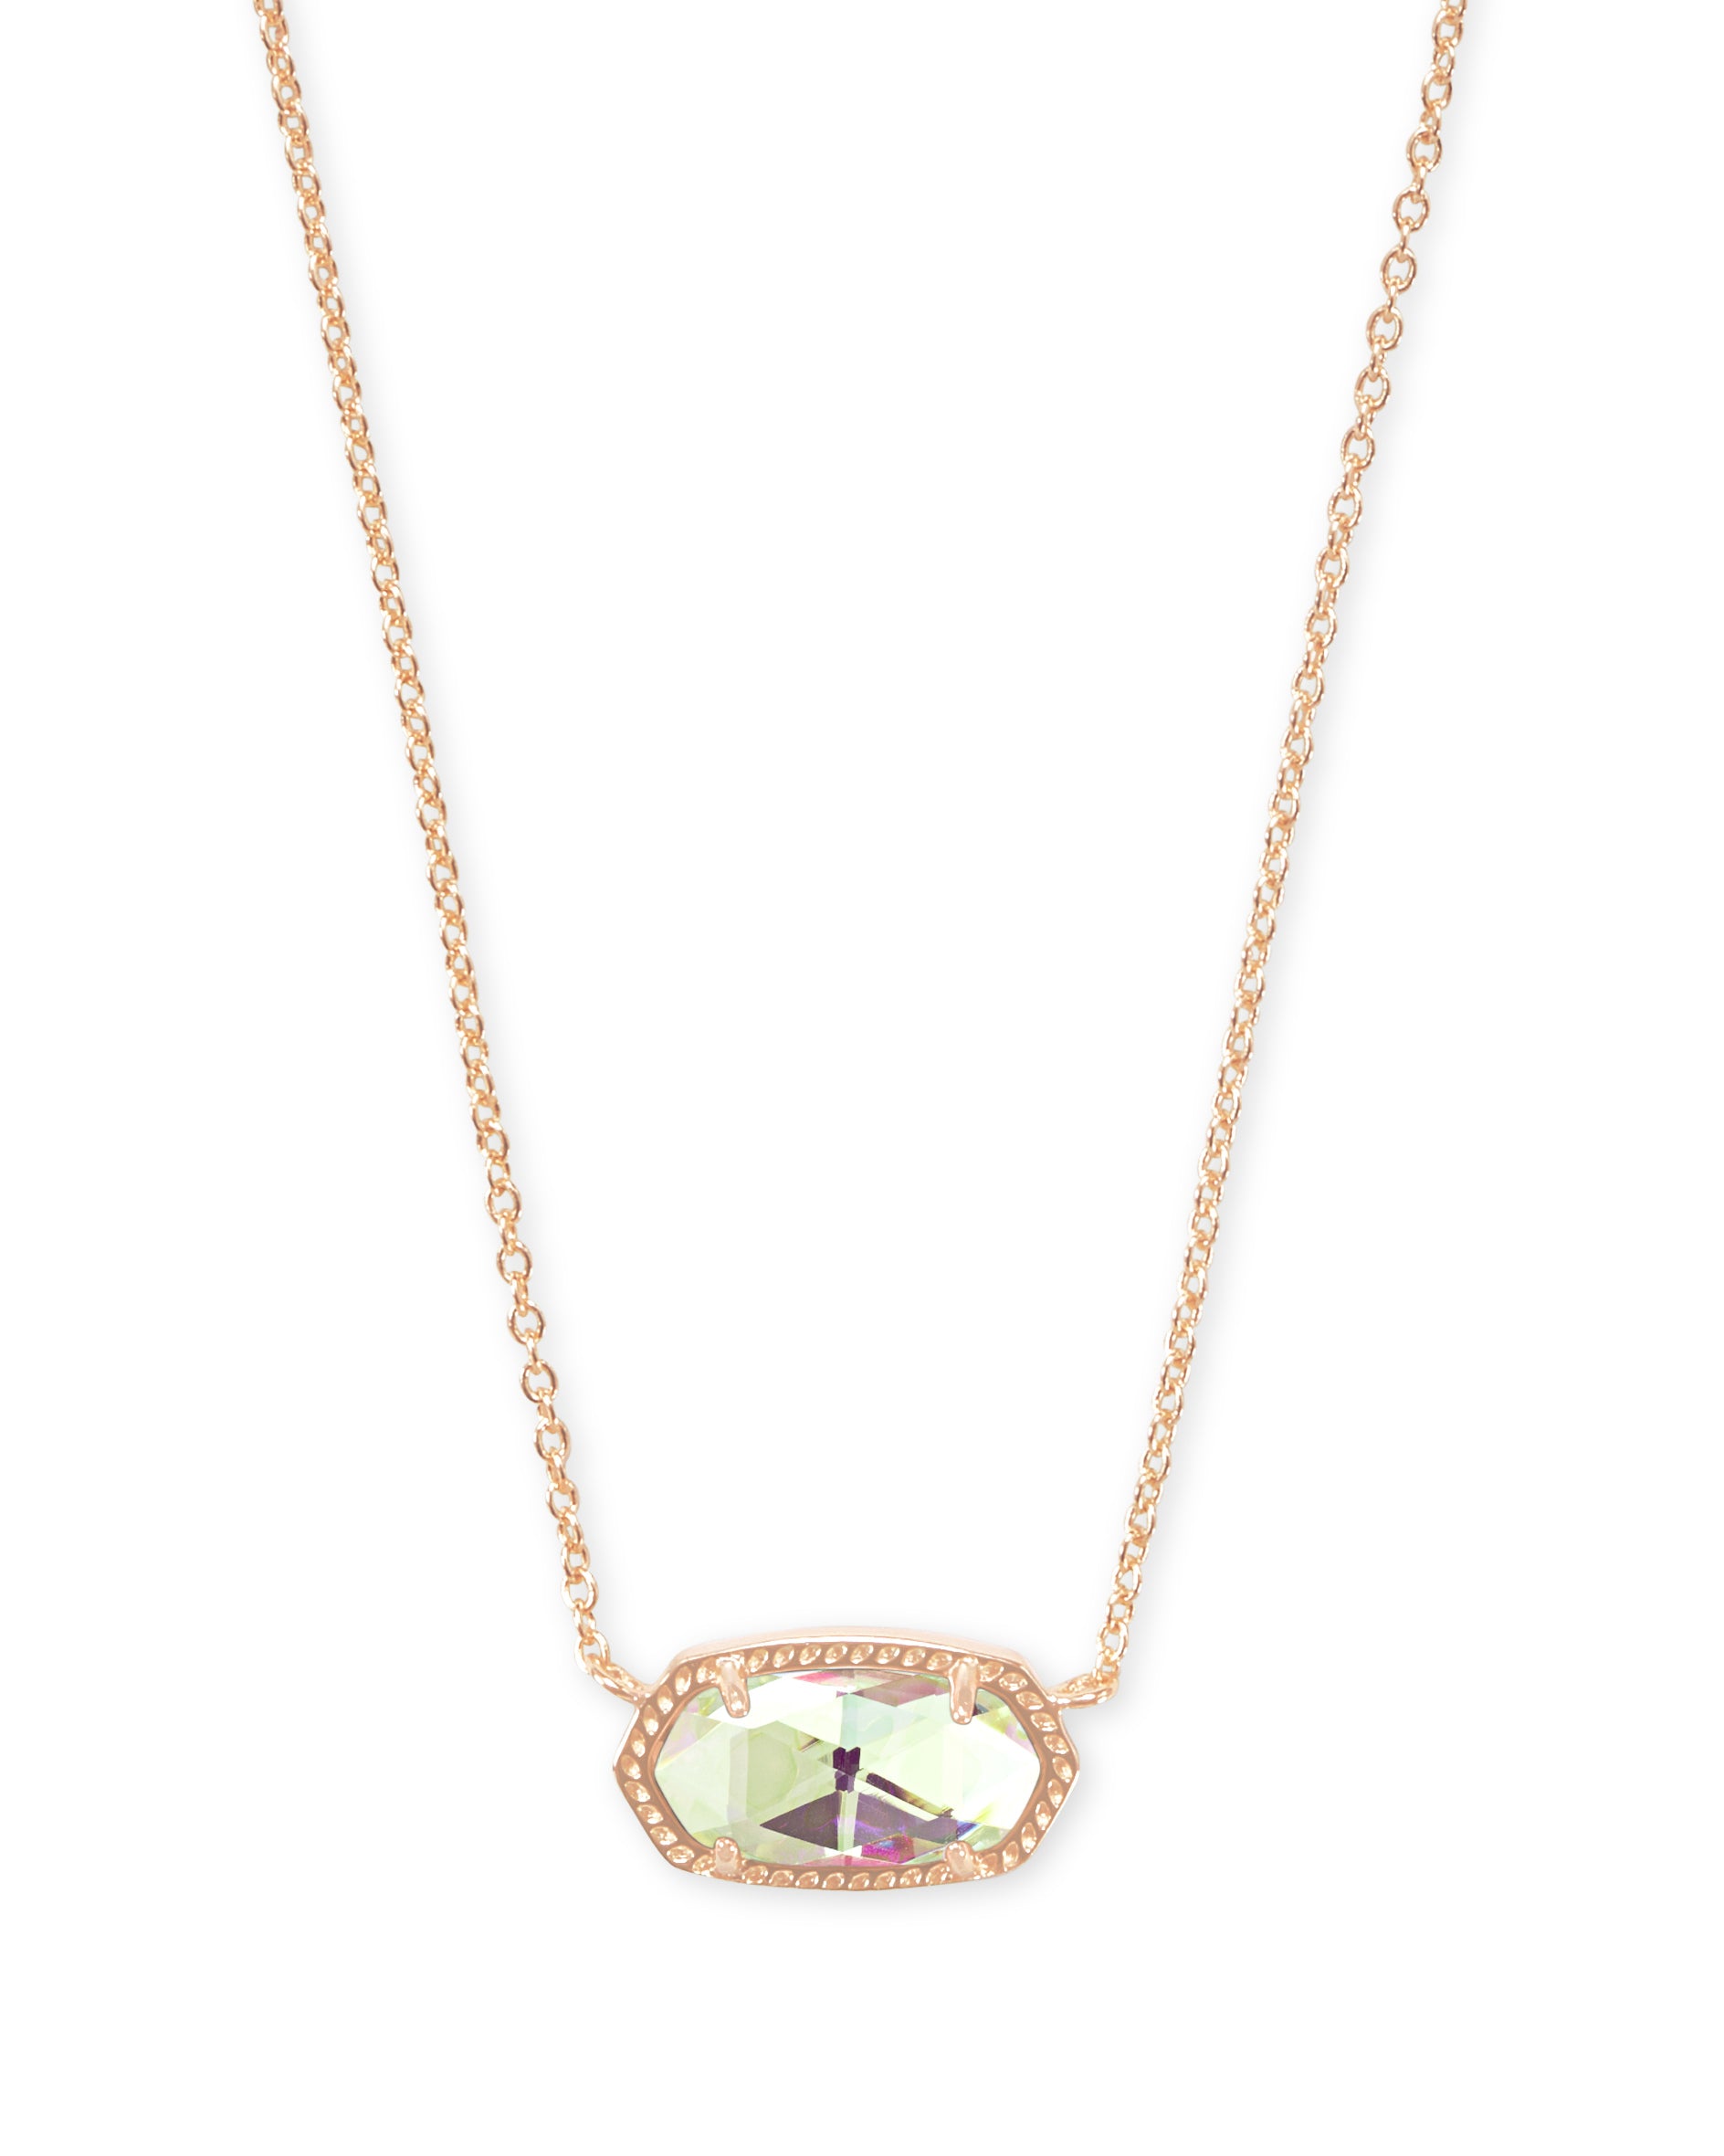 Double Heart Pendant Necklace in Silver | Kendra Scott